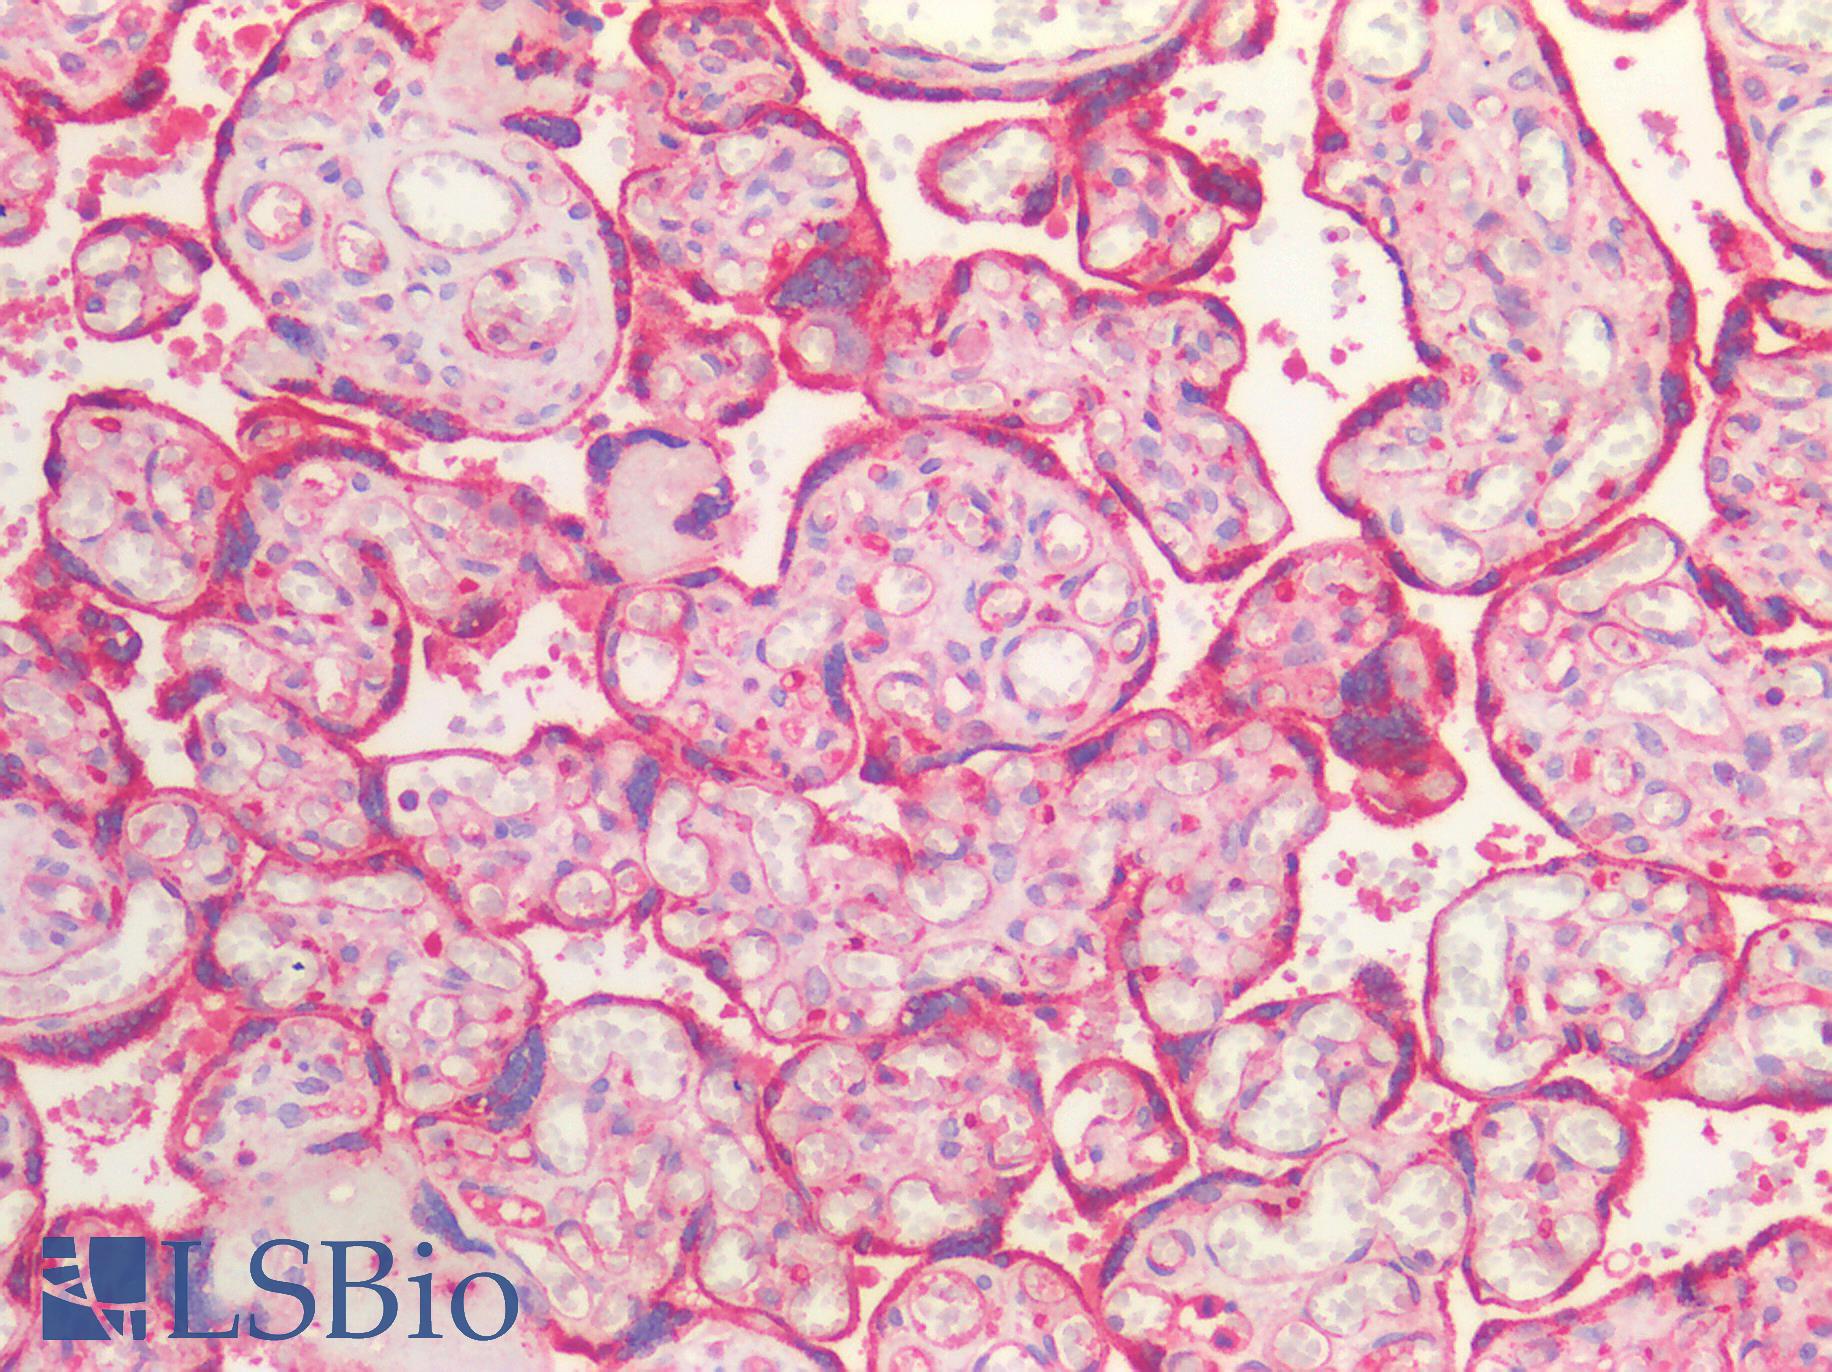 ACVR2 / ACVR2A Antibody - Human Placenta: Formalin-Fixed, Paraffin-Embedded (FFPE)